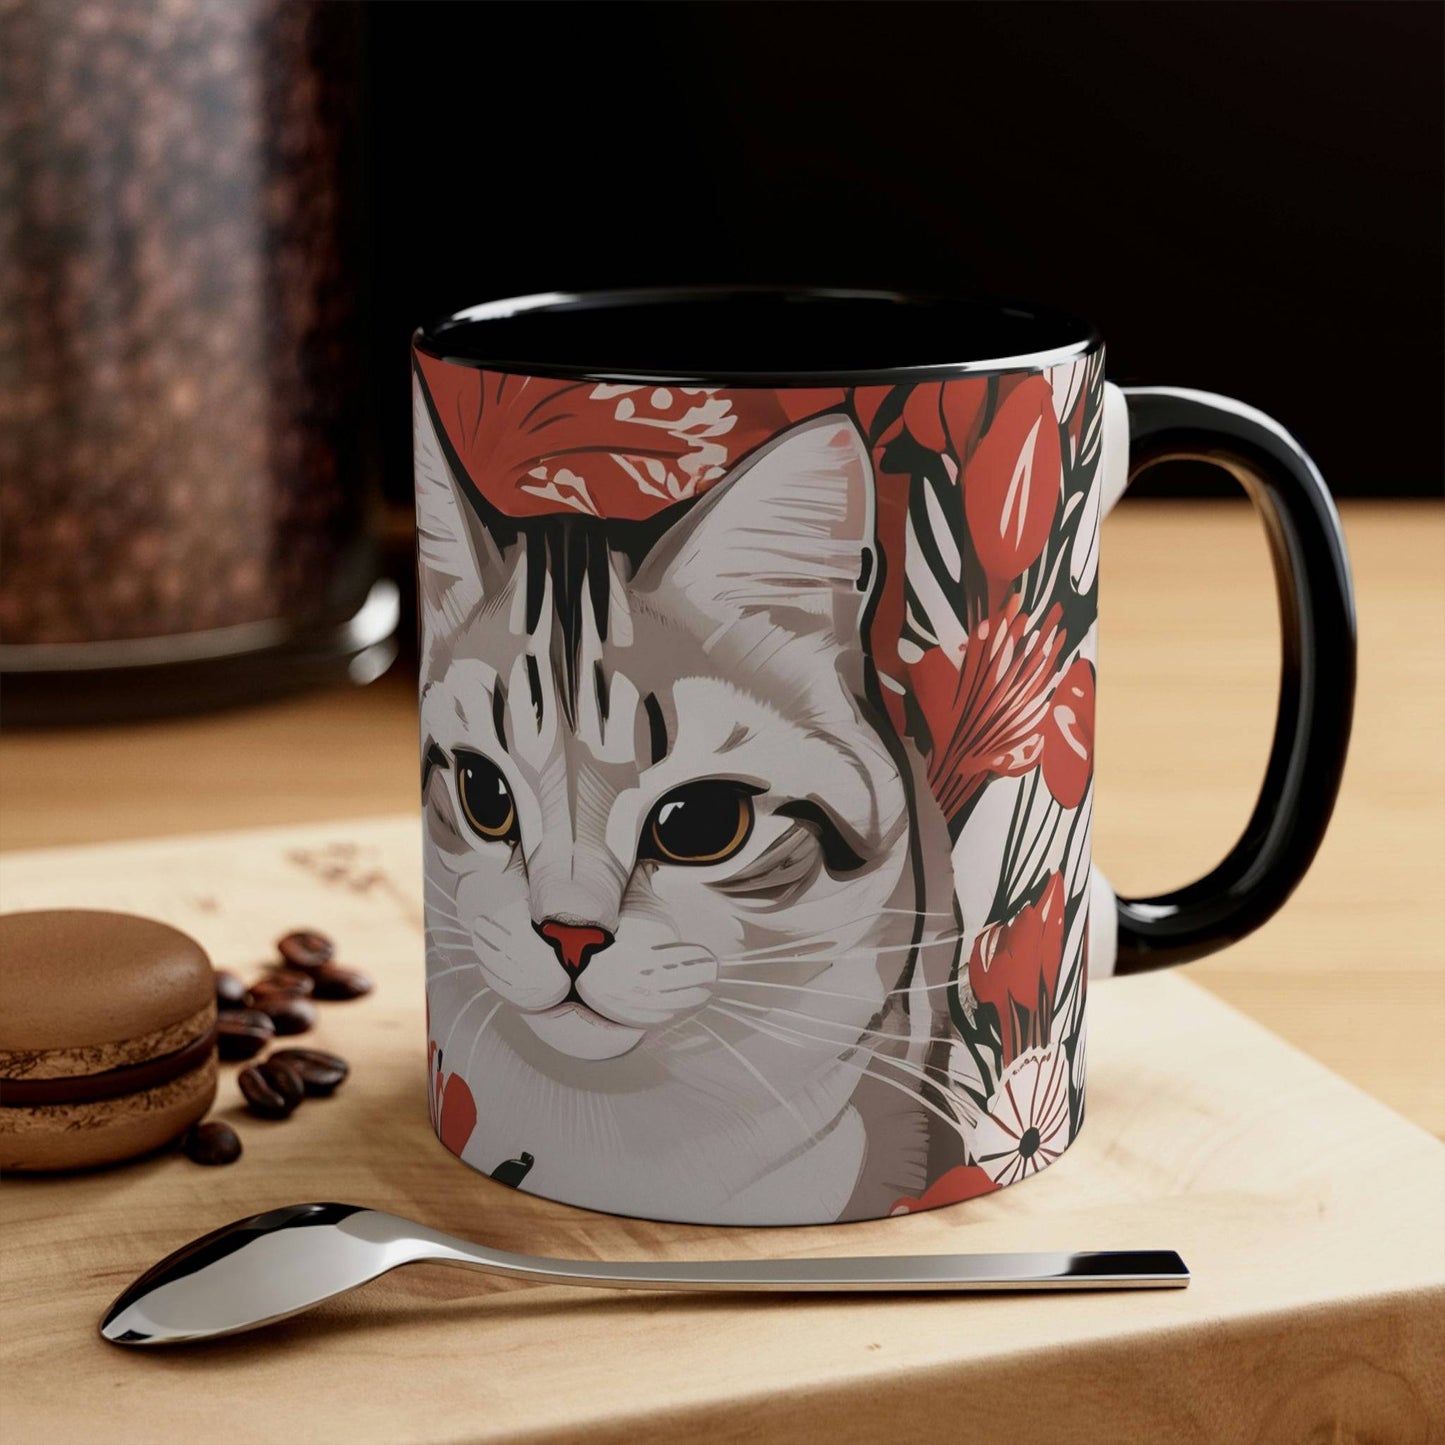 Ceramic Mug for Coffee, Tea, Hot Cocoa. Home/Office, White Cats